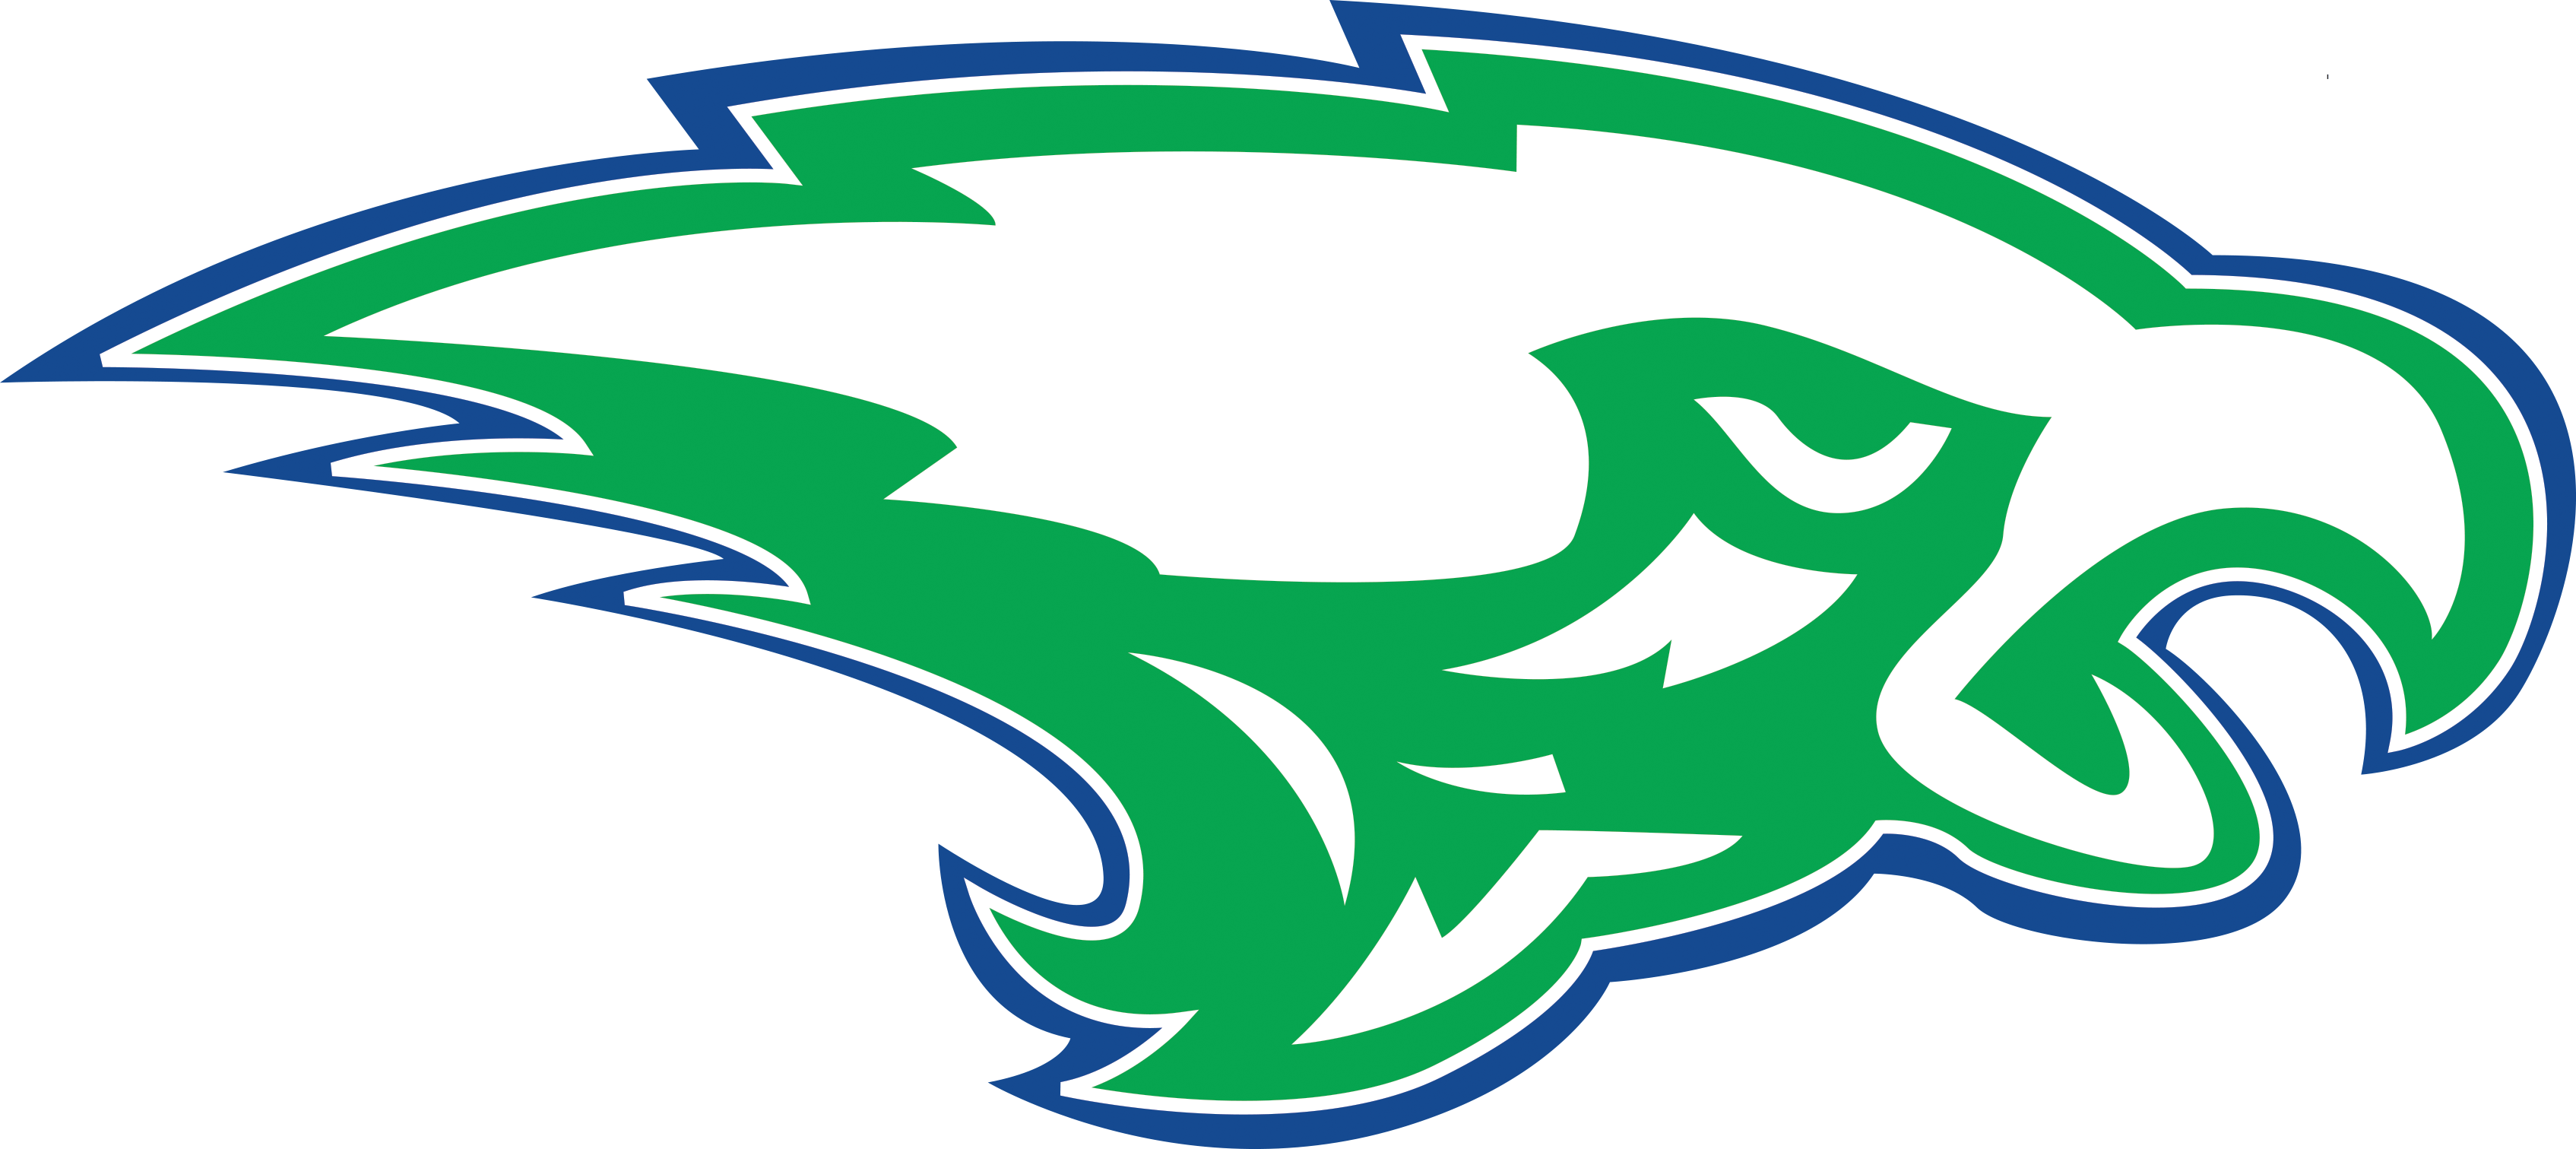 Green Hawk Logo - About Us - Heights Elementary School